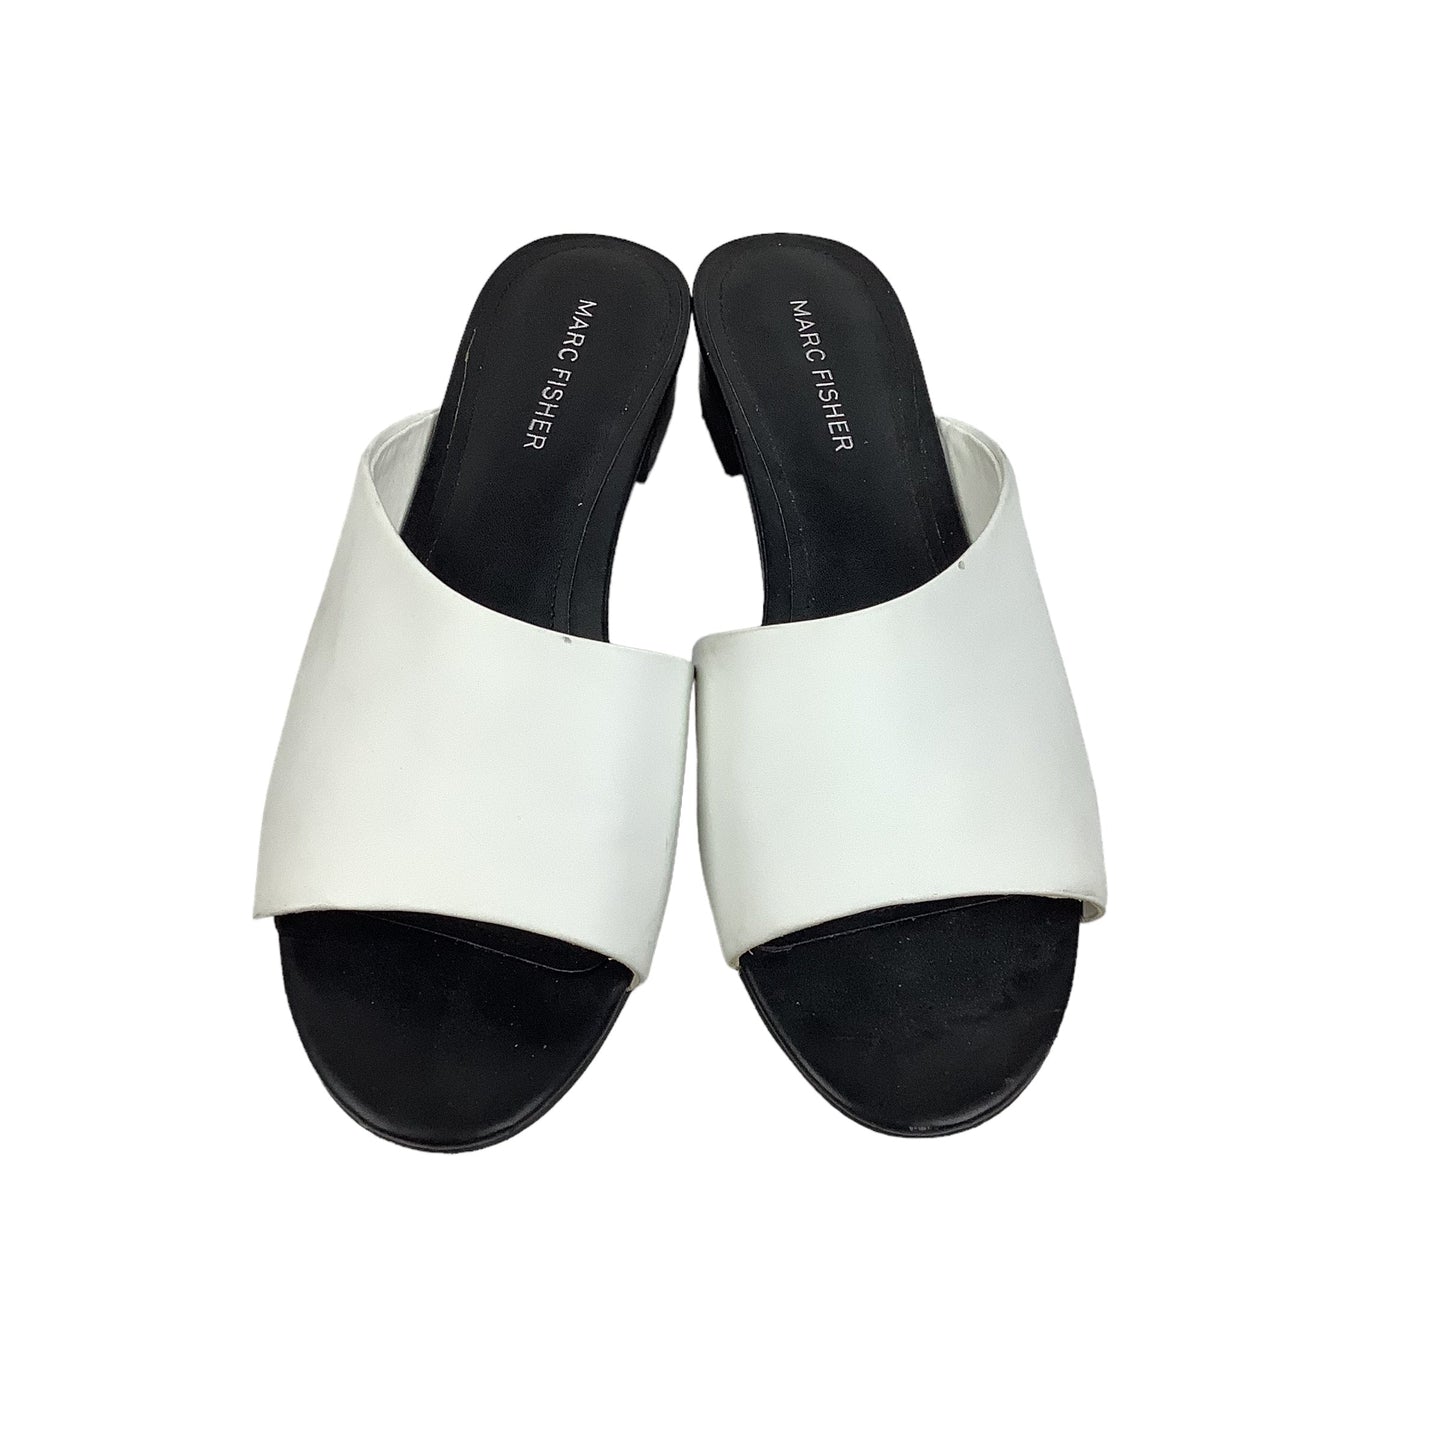 Black & White Sandals Heels Block Marc Fisher, Size 8